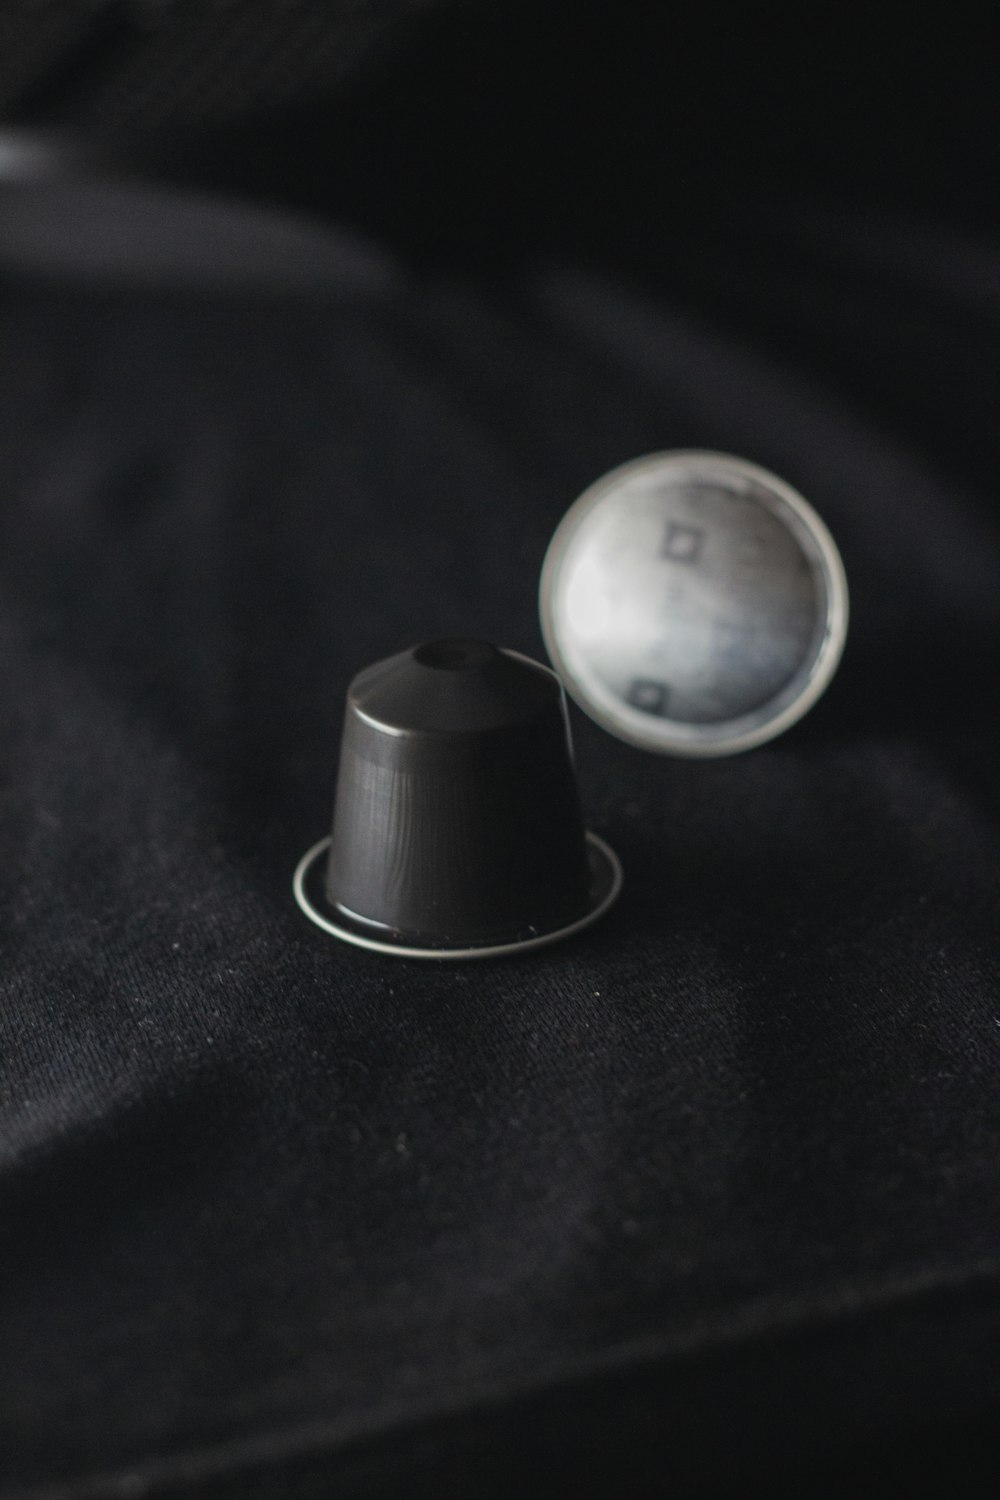 silver round ornament on black textile